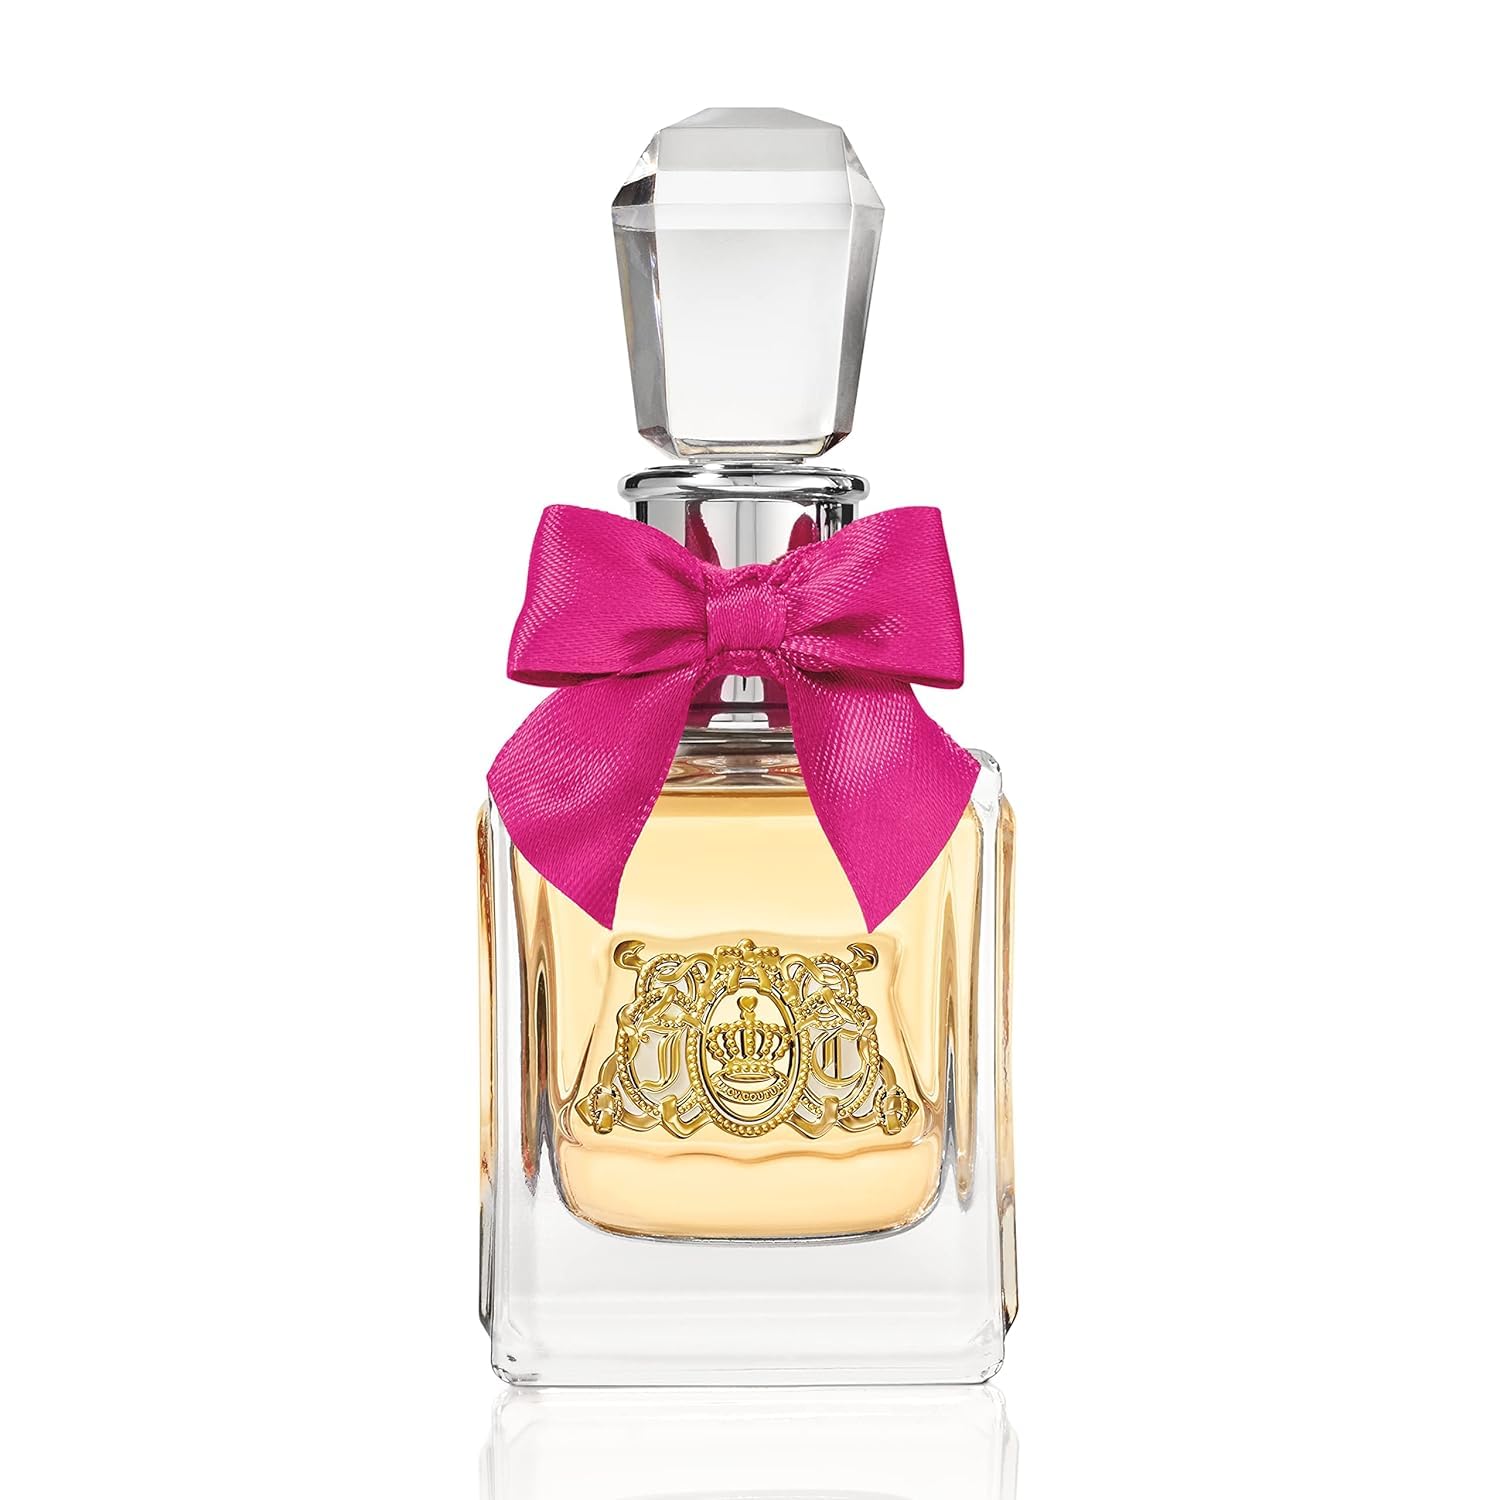 Juicy Couture, Viva La Juicy Eau De Parfum, Women's Perfume with Notes of Mandarin, Gardenia & Caramel, Fruity & Sweet Perfume for Women, EDP Spray, 1 Oz